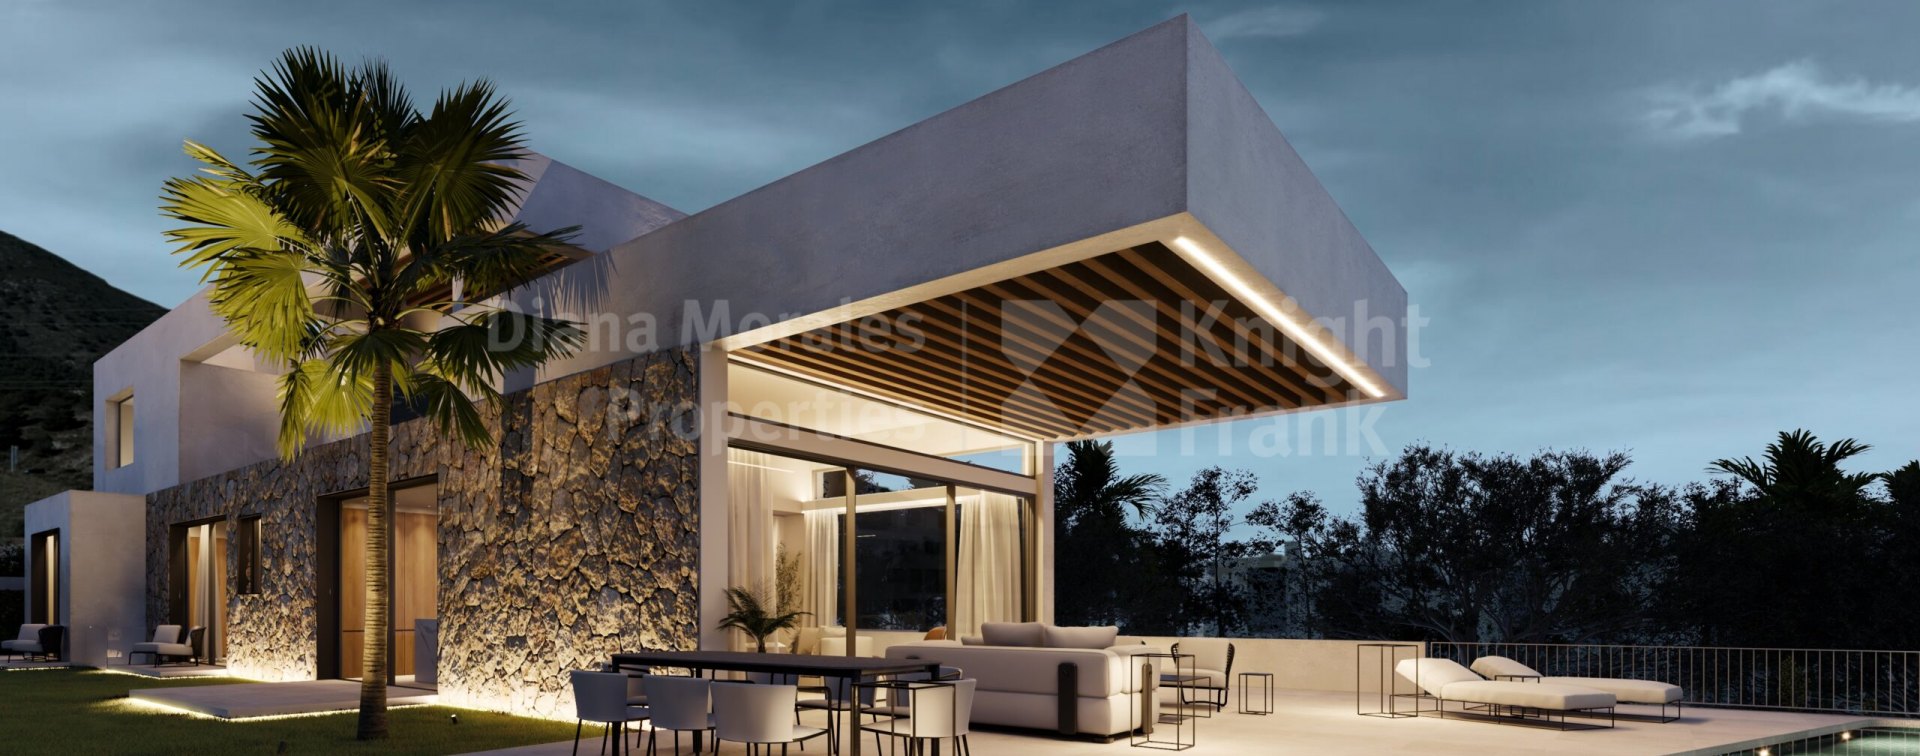 Villas Higueron, Newly Constructed Southeast-Facing Development in El Higueron